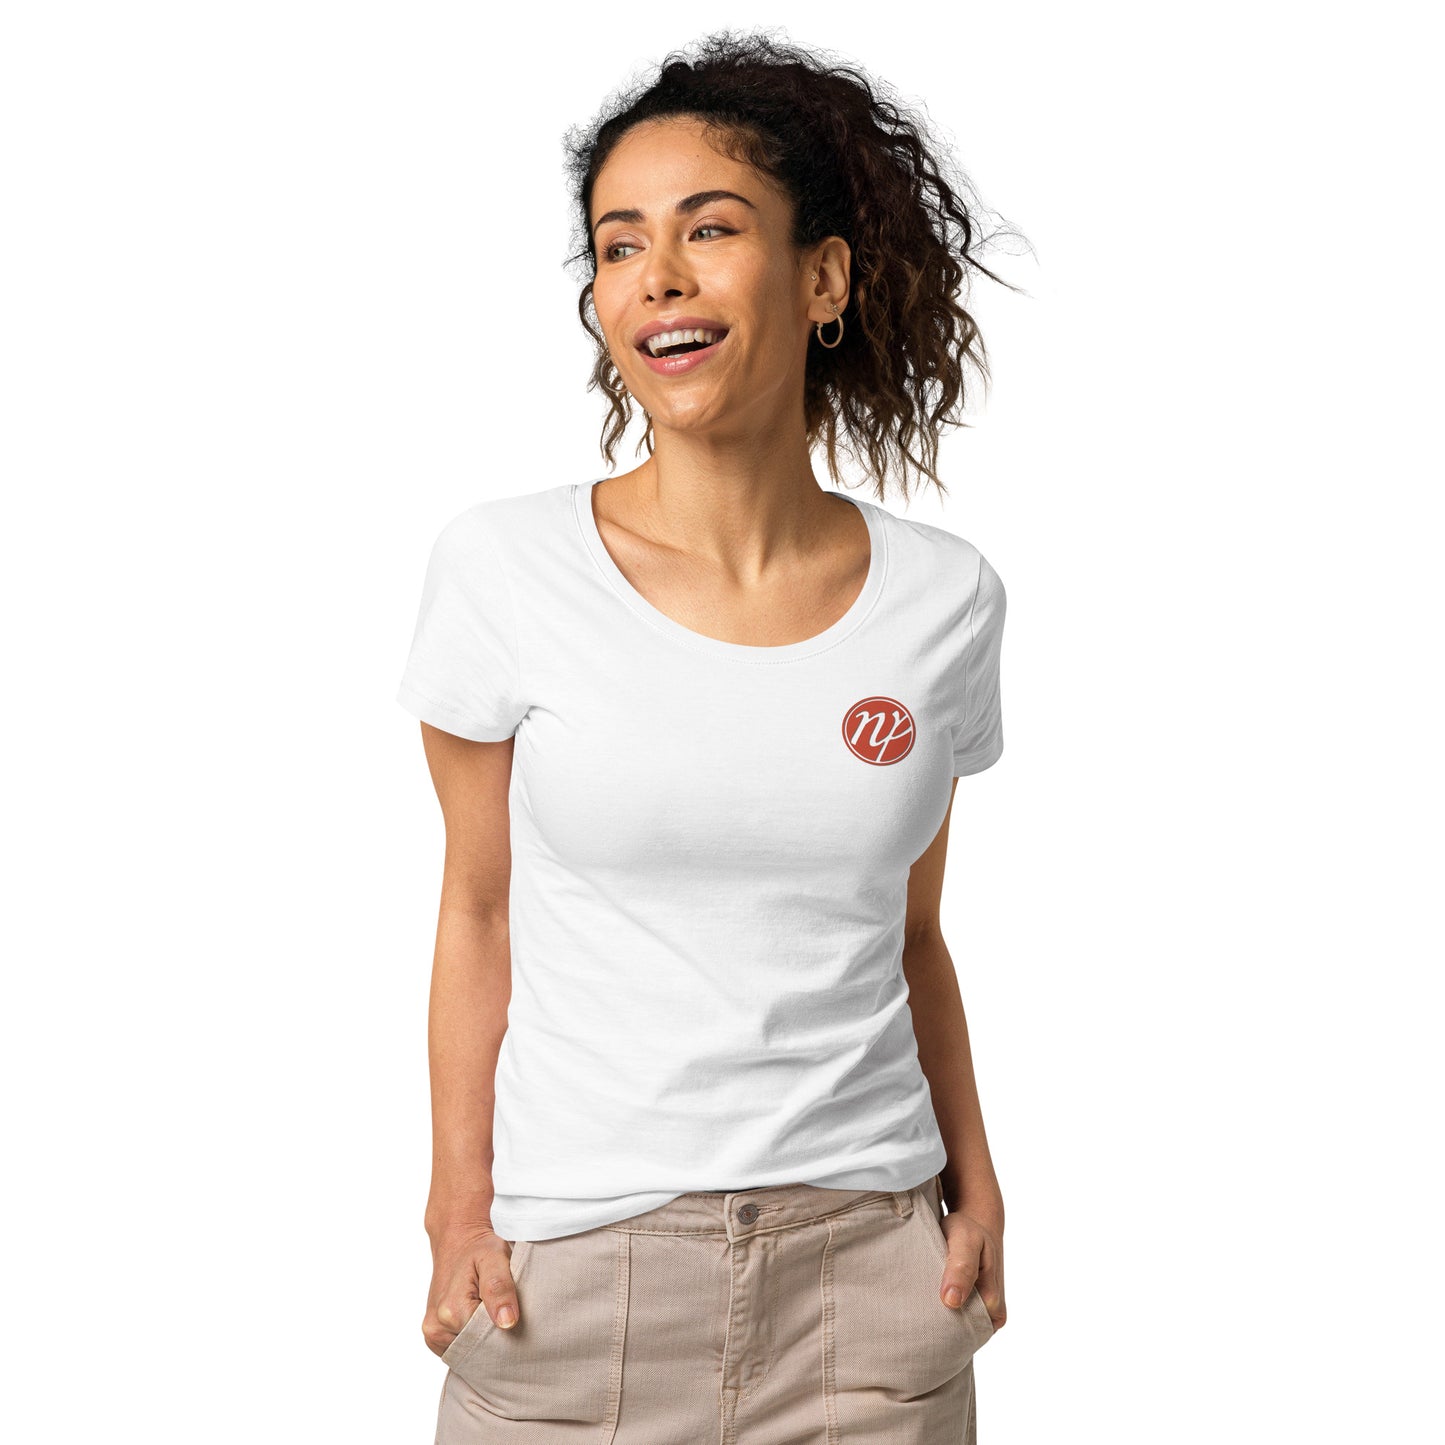 Basic Bio-T-Shirt für Näh-Mädels - nostalgia-privatim